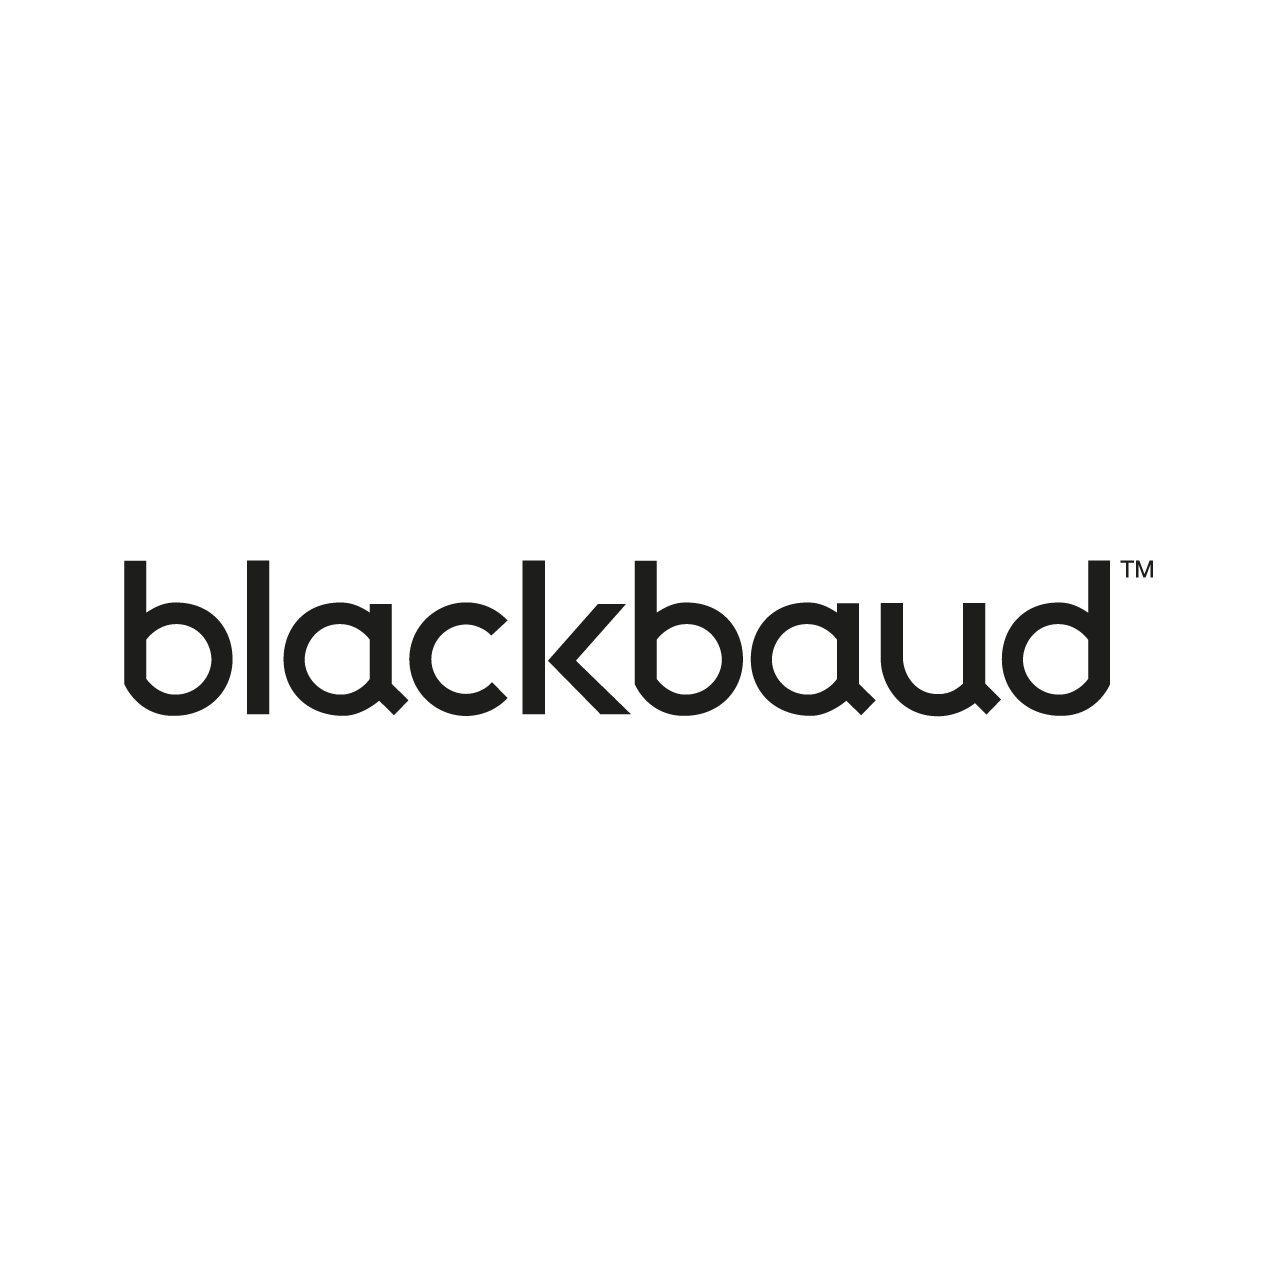 Blackbaud-logo.png